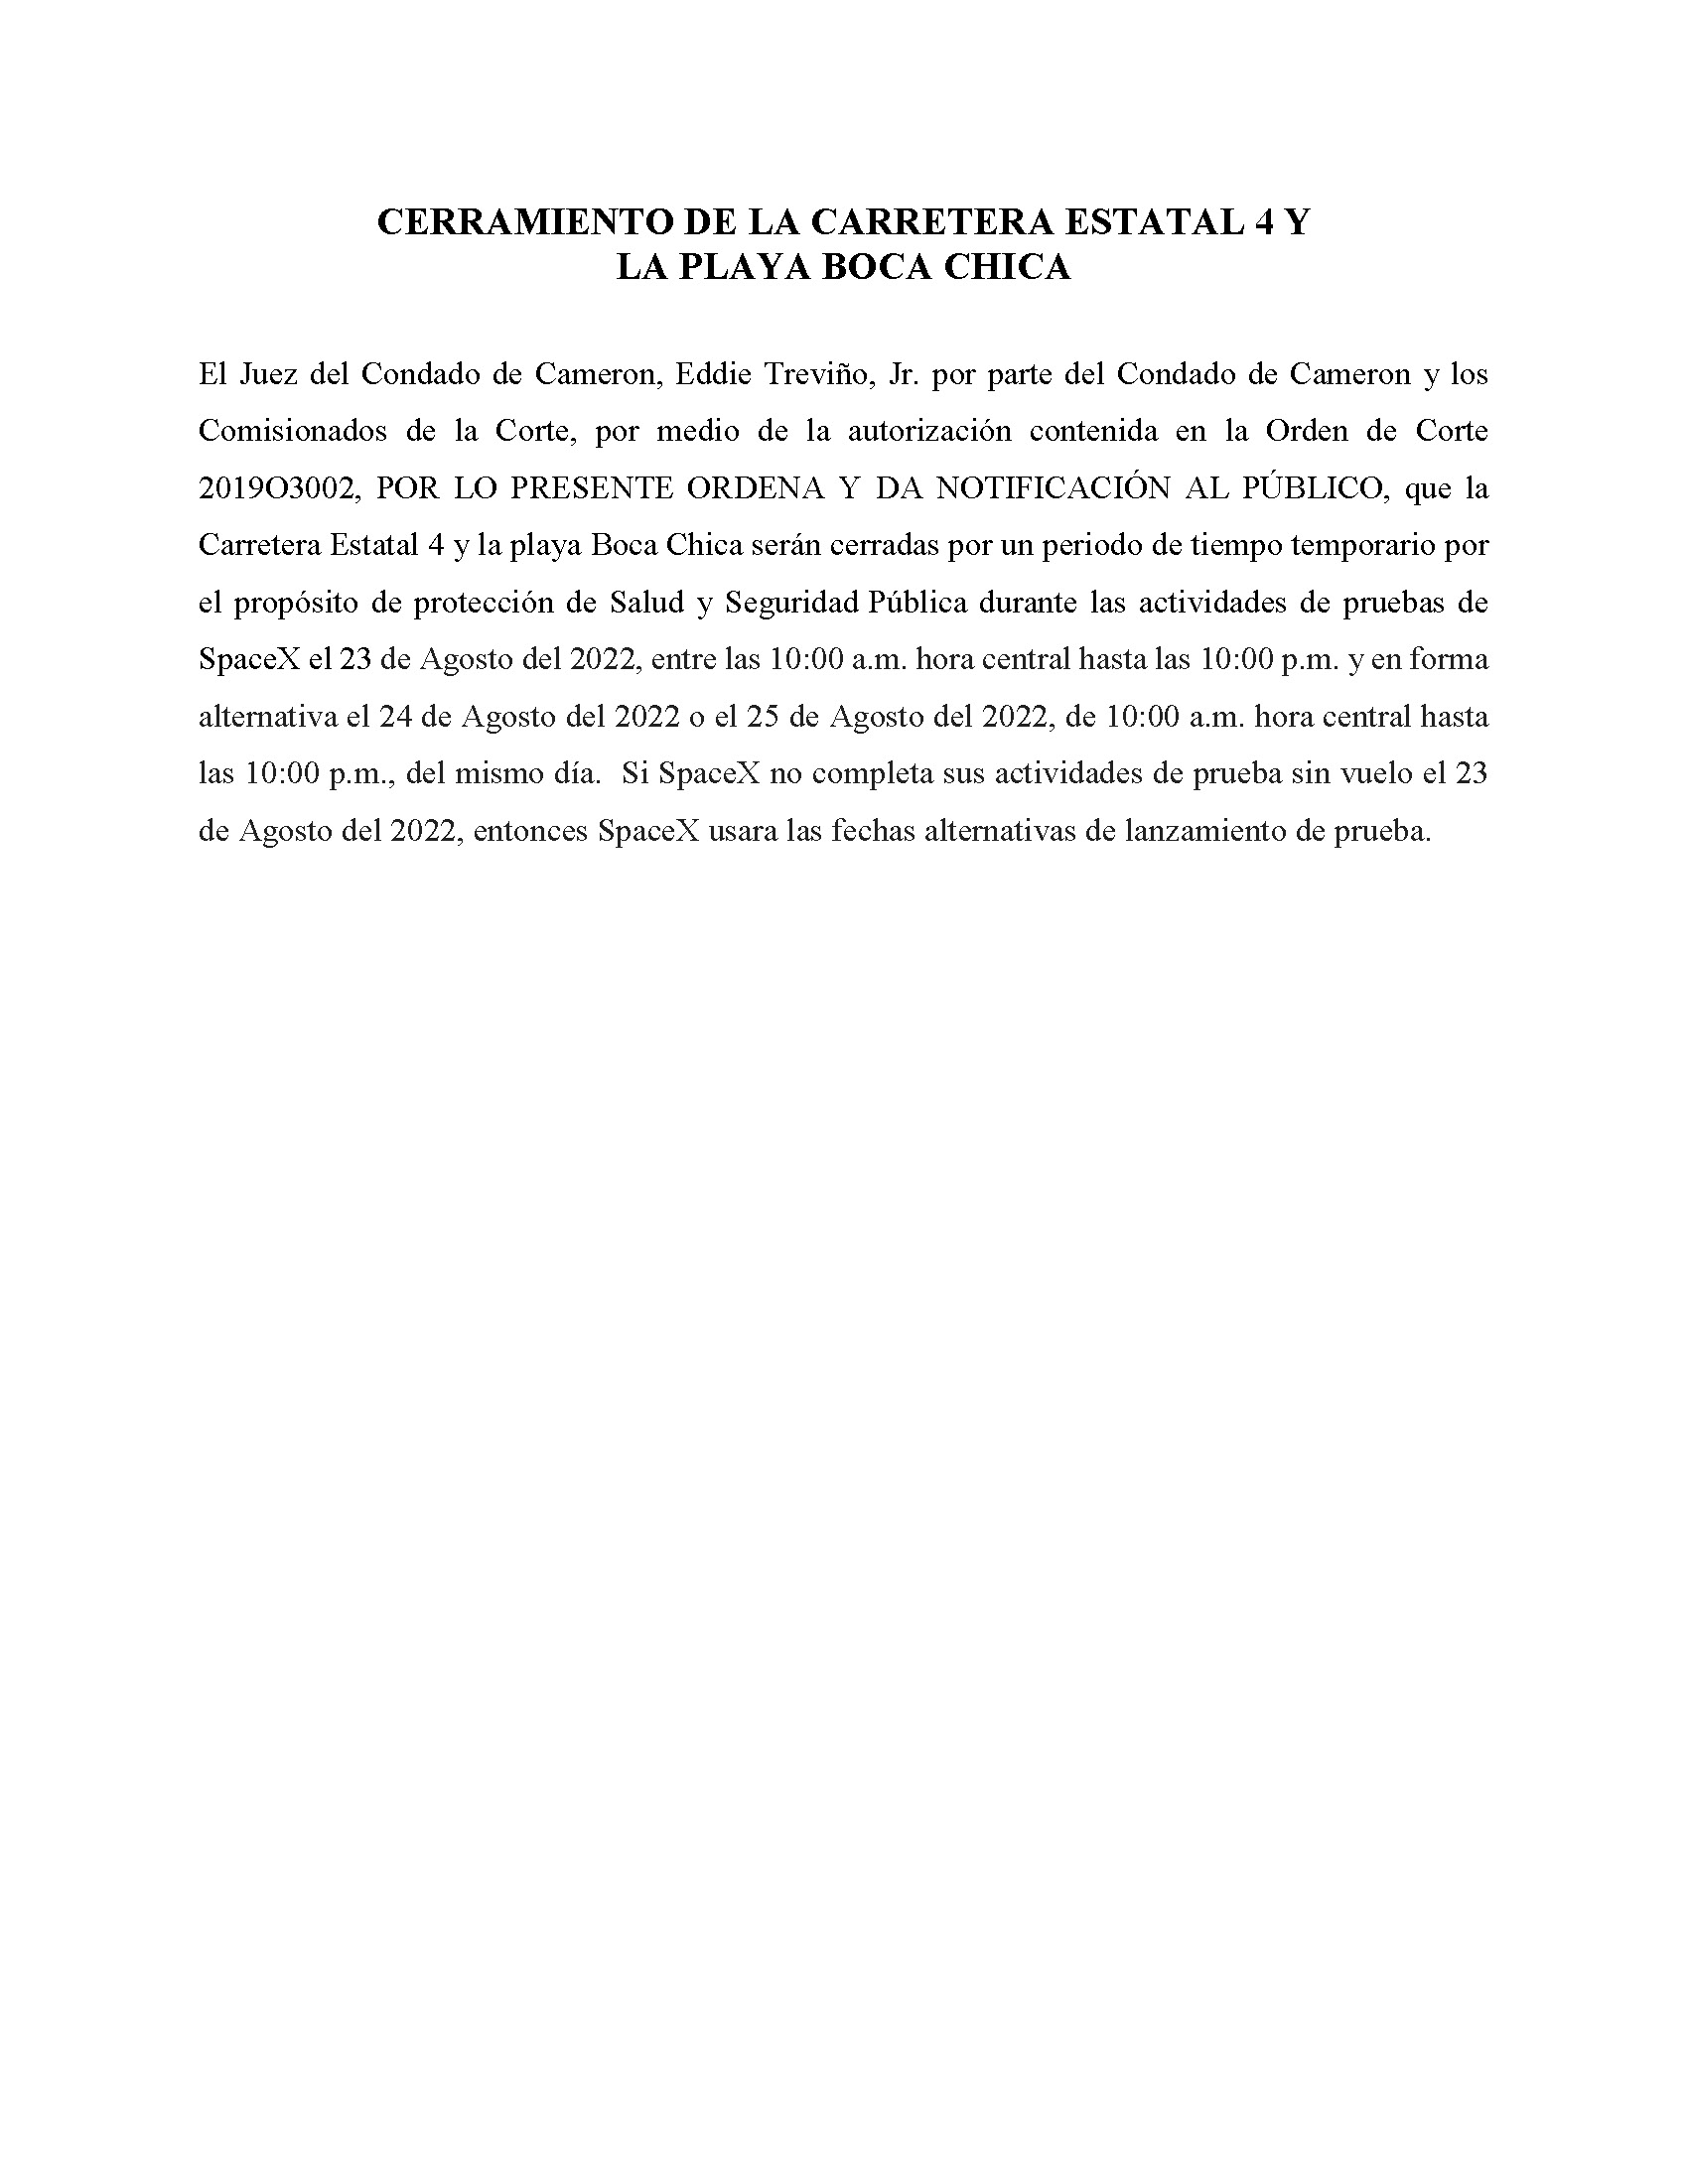 ORDER.CLOSURE OF HIGHWAY 4 Y LA PLAYA BOCA CHICA.SPANISH.08.23.2022